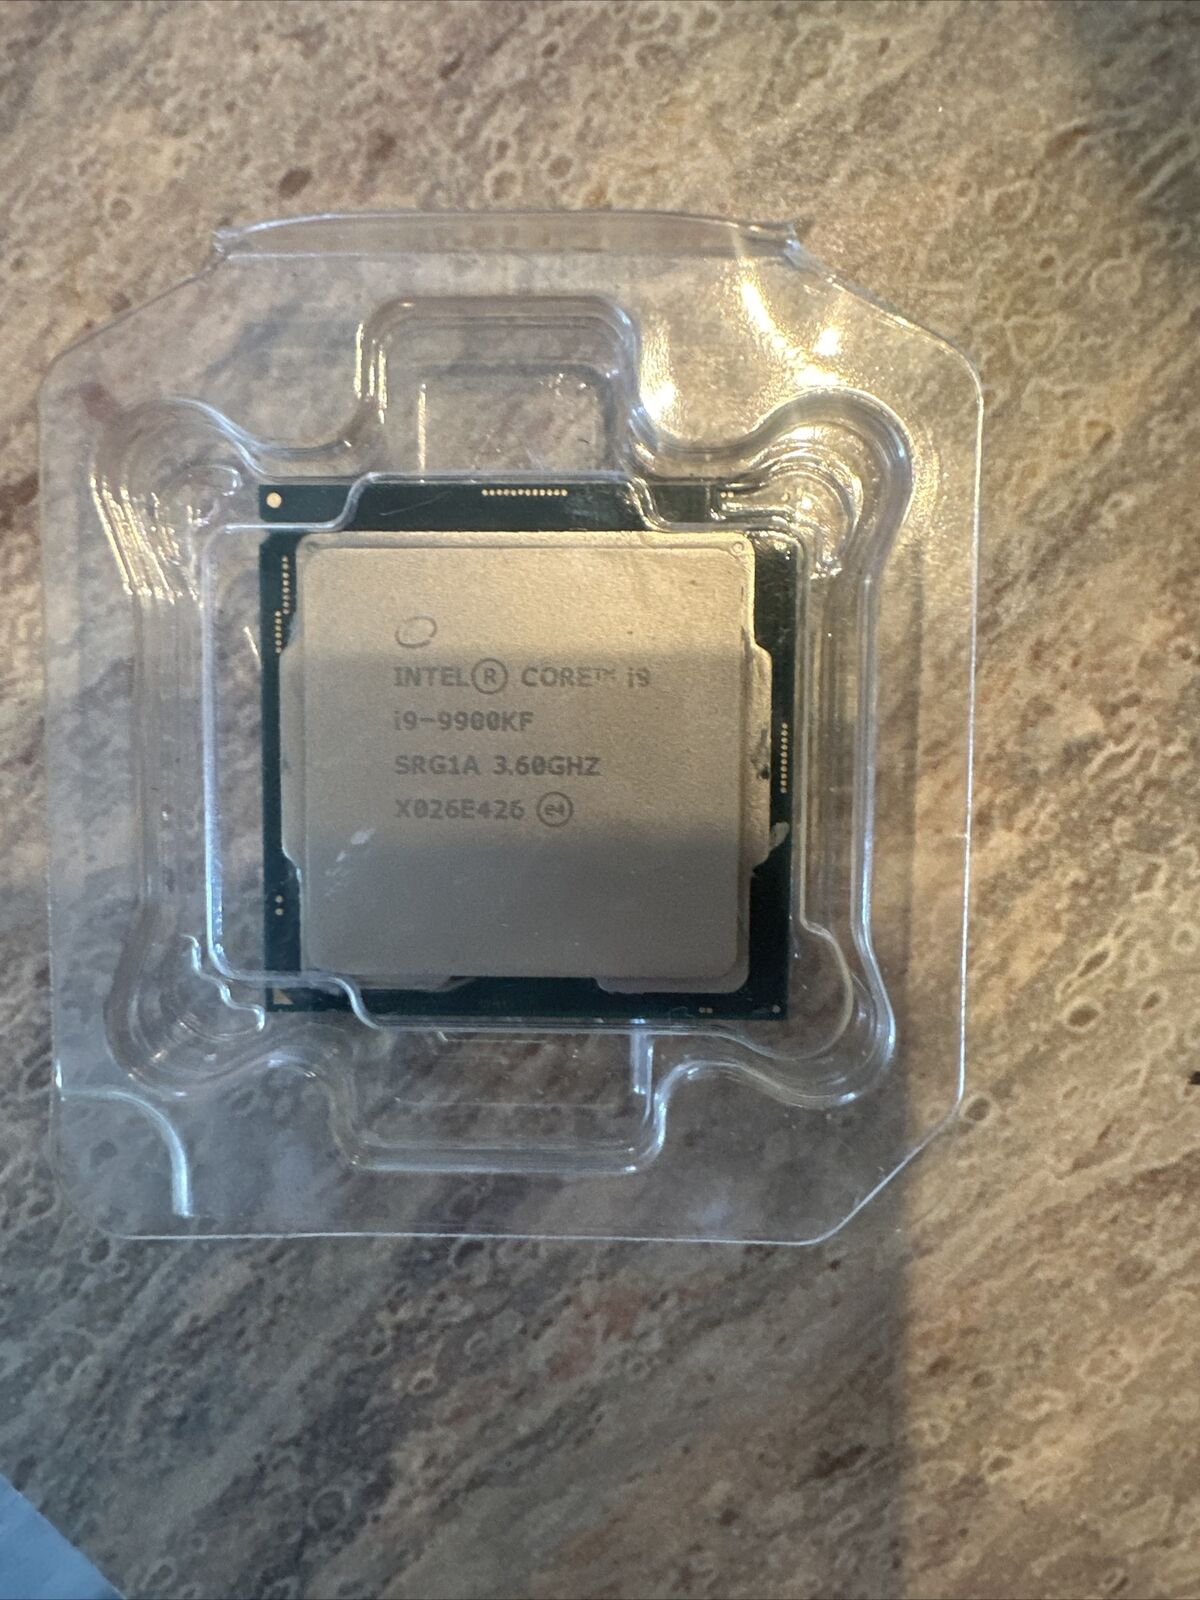 Intel Core i9-9900KF 3.60GHz 8-Core LGA1151 CPU